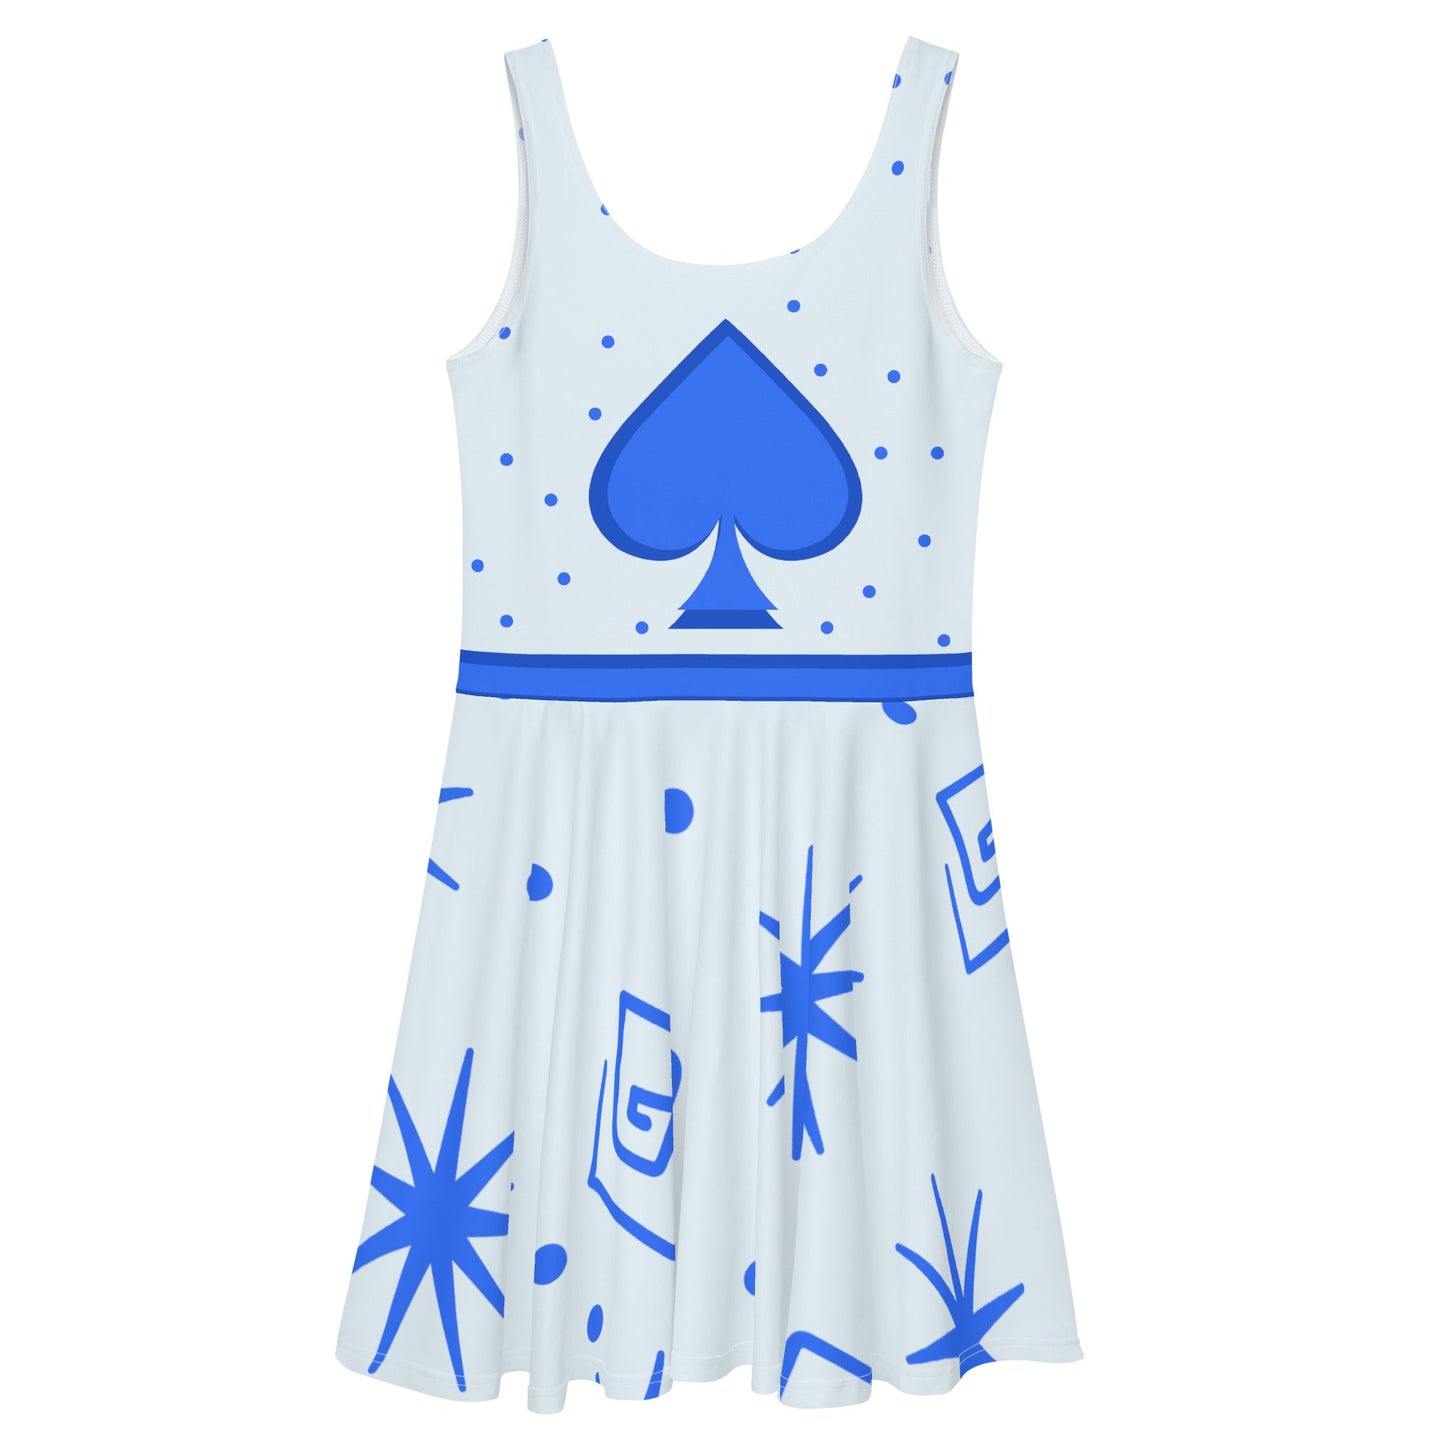 Teacup Blue Skater Dress alice costumebachelorette stylesCoordinating trip#tag4##tag5##tag6#